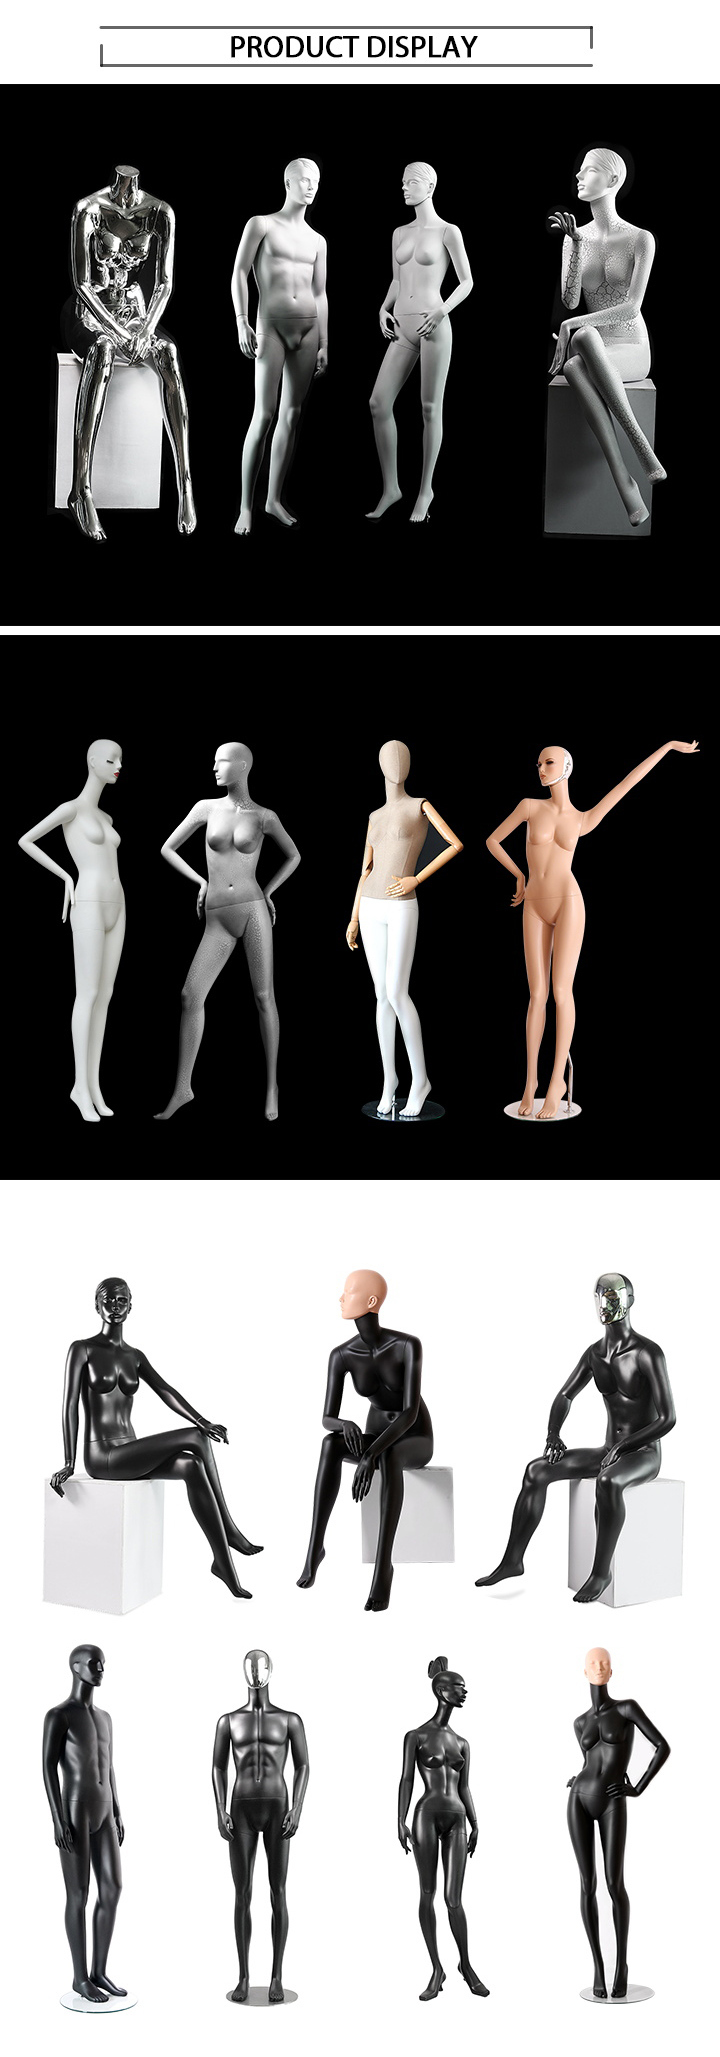 168cm Height Window Display Full Body Sitting Mannequin Model